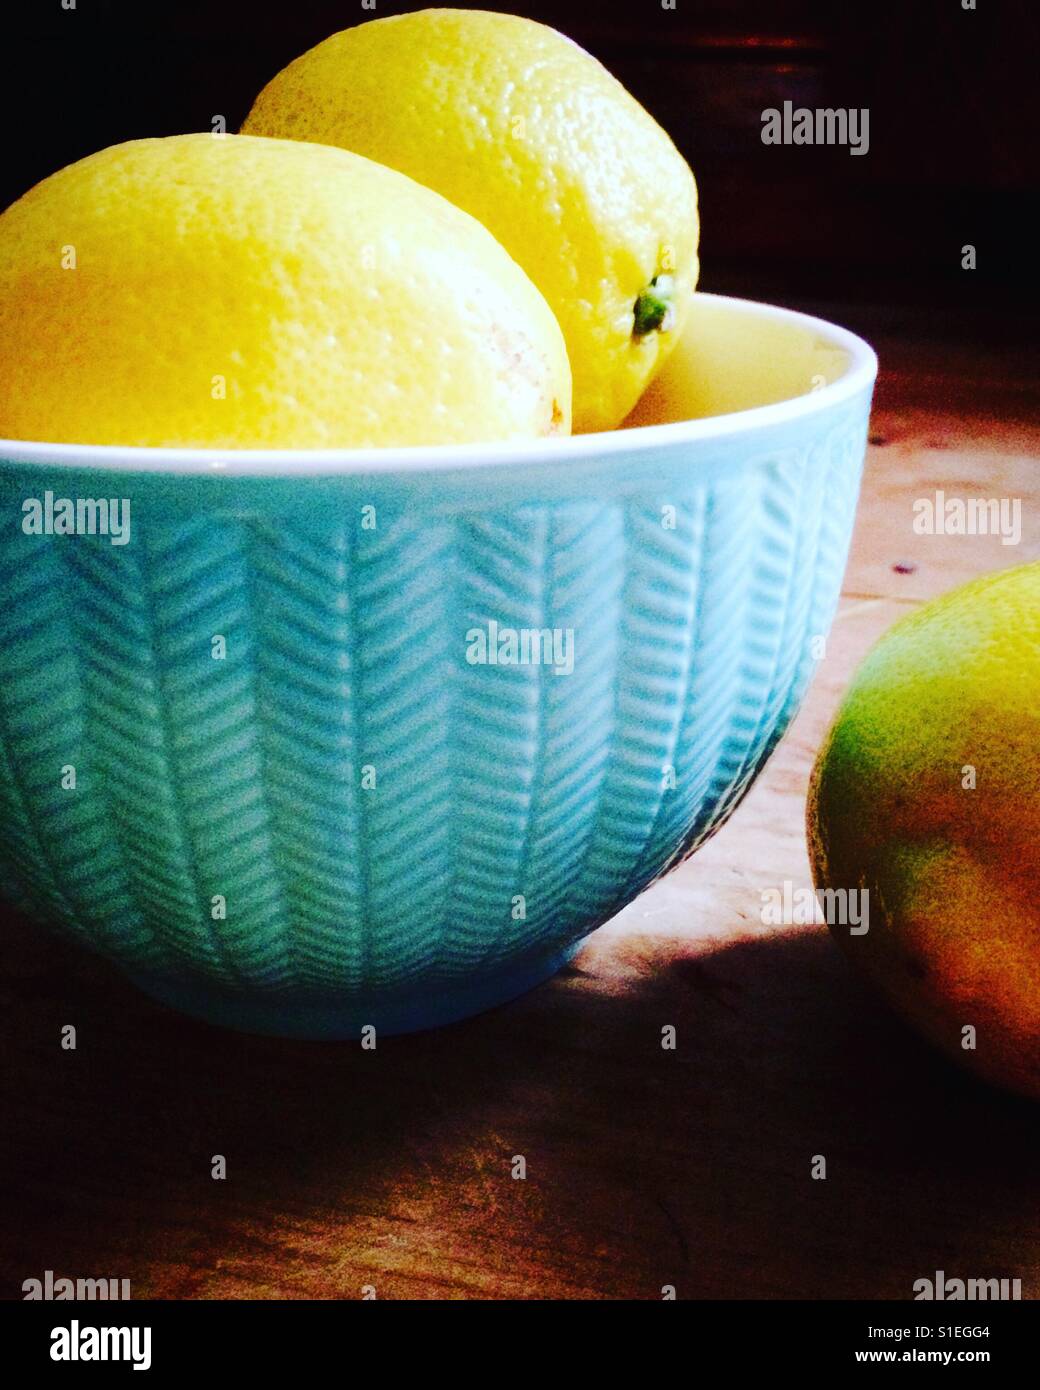 A bowl of lemons Stock Photo